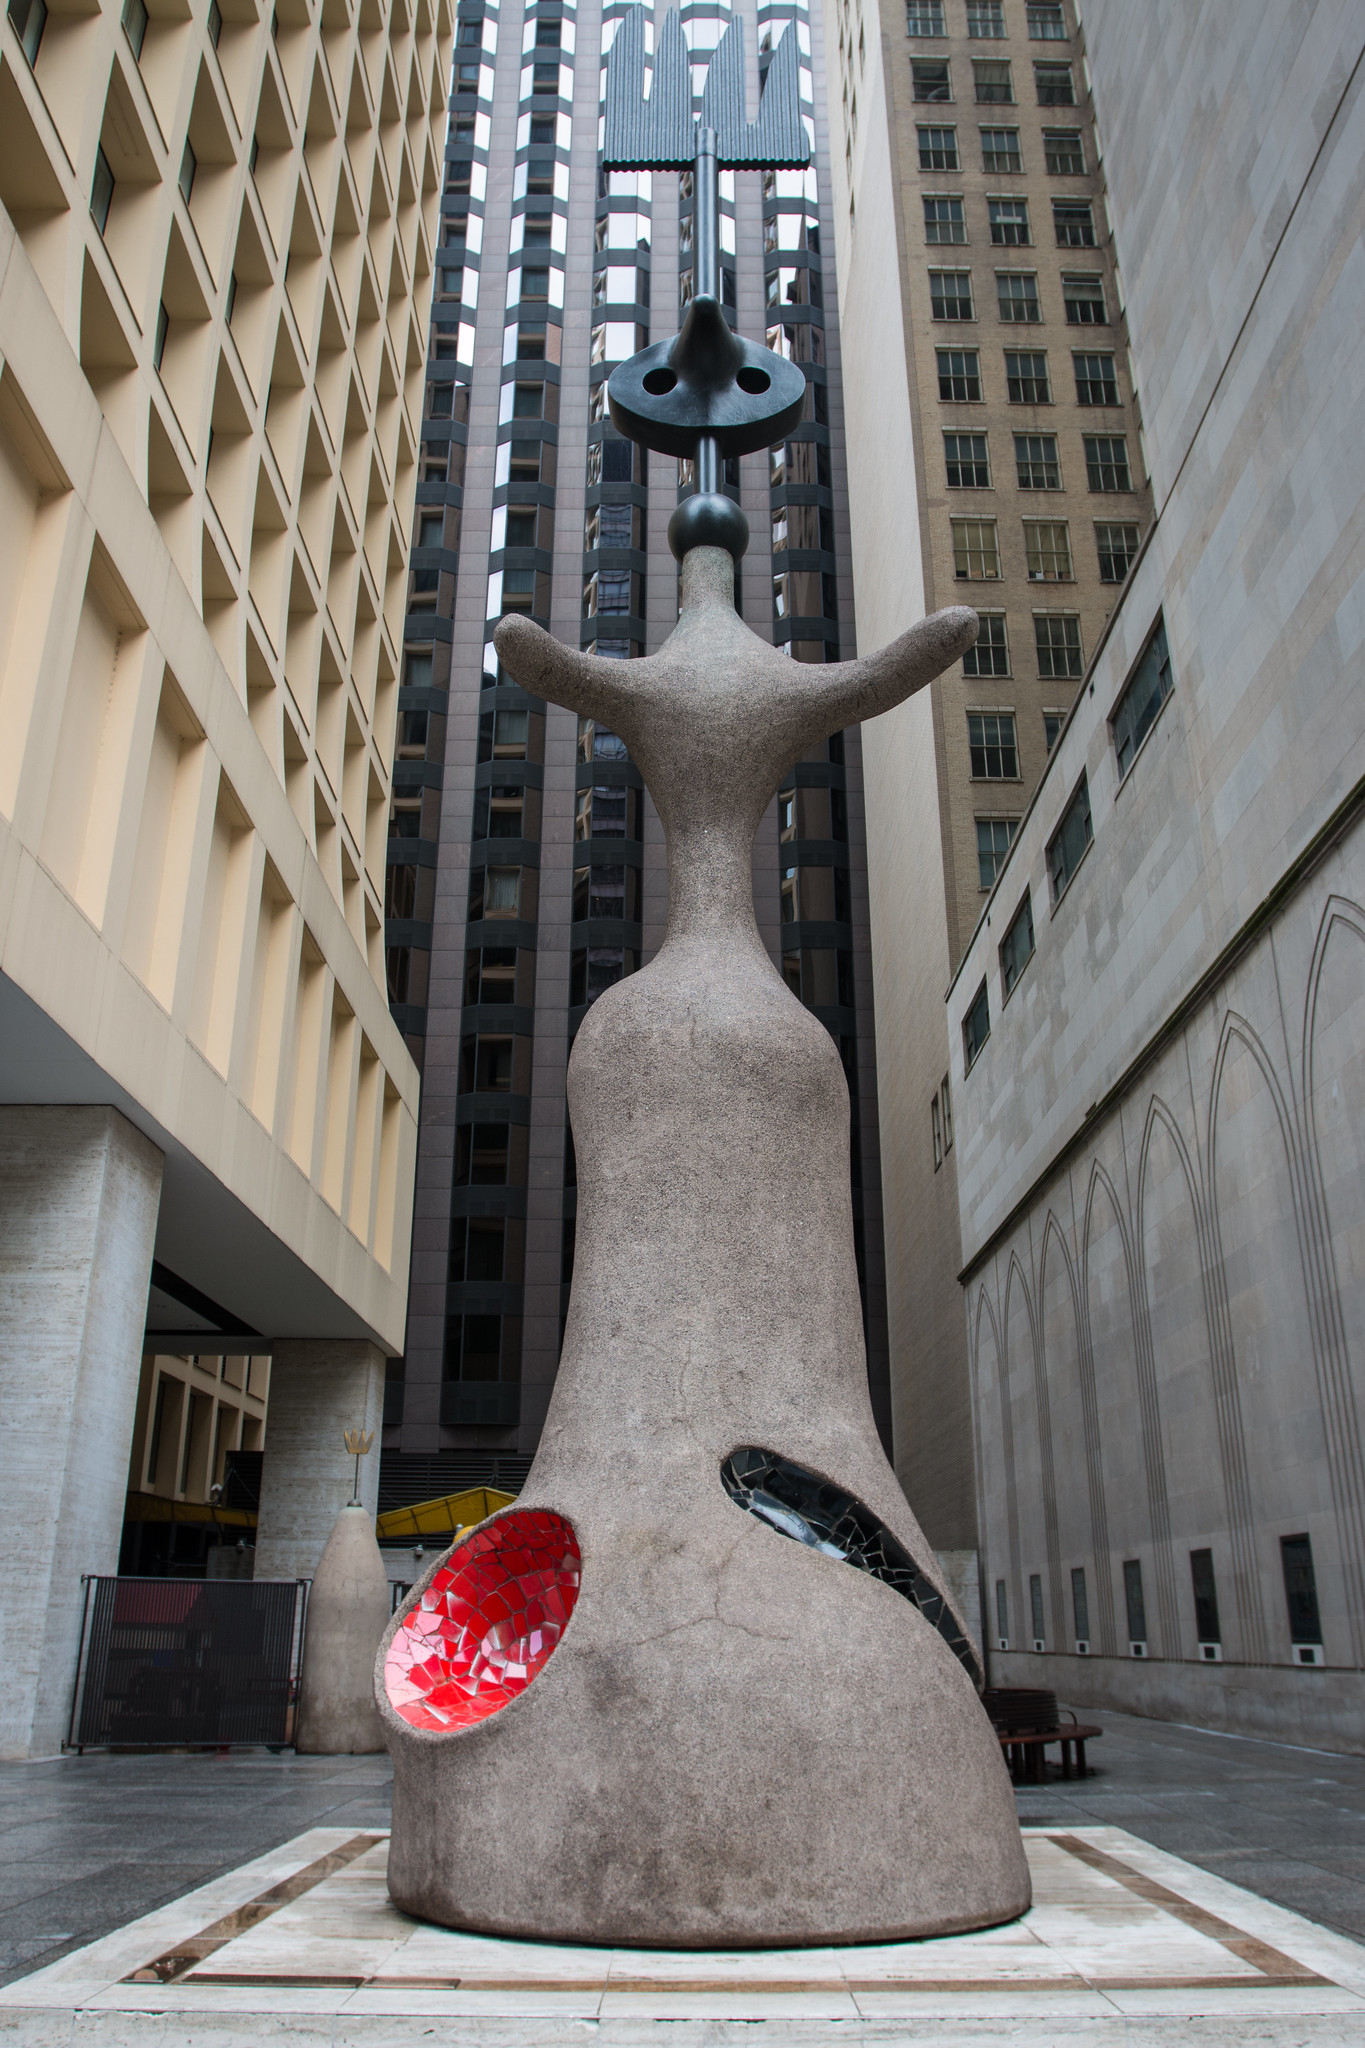 Miro's Chicago Sculpture